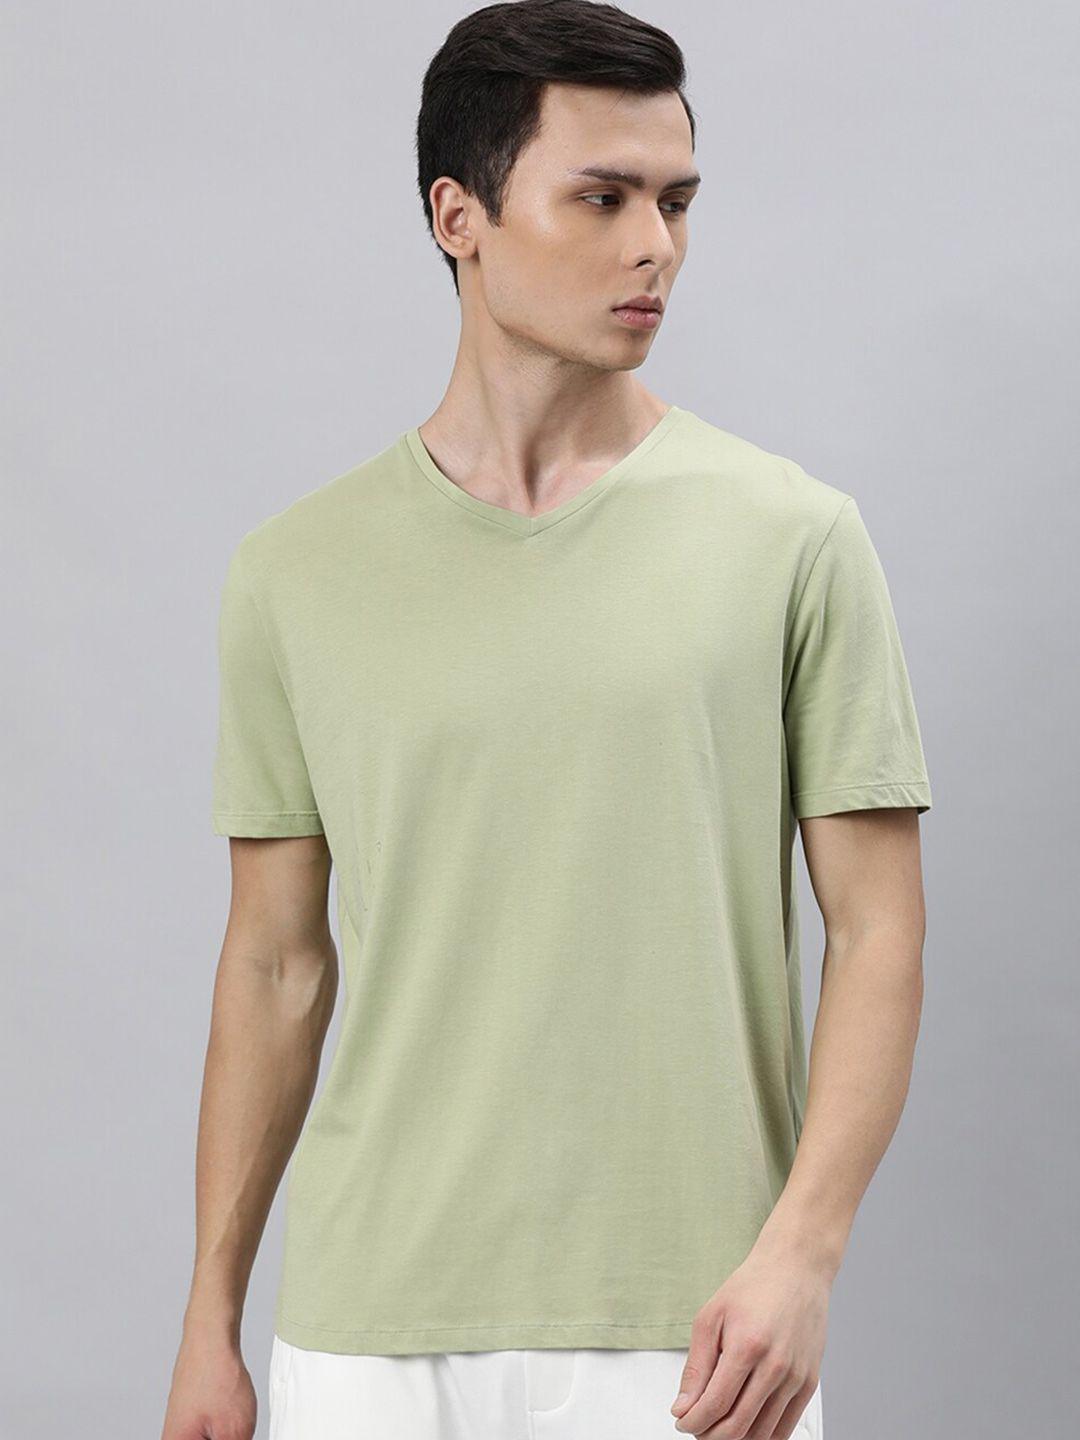 articale men green solid v-neck slim fit cotton t-shirt